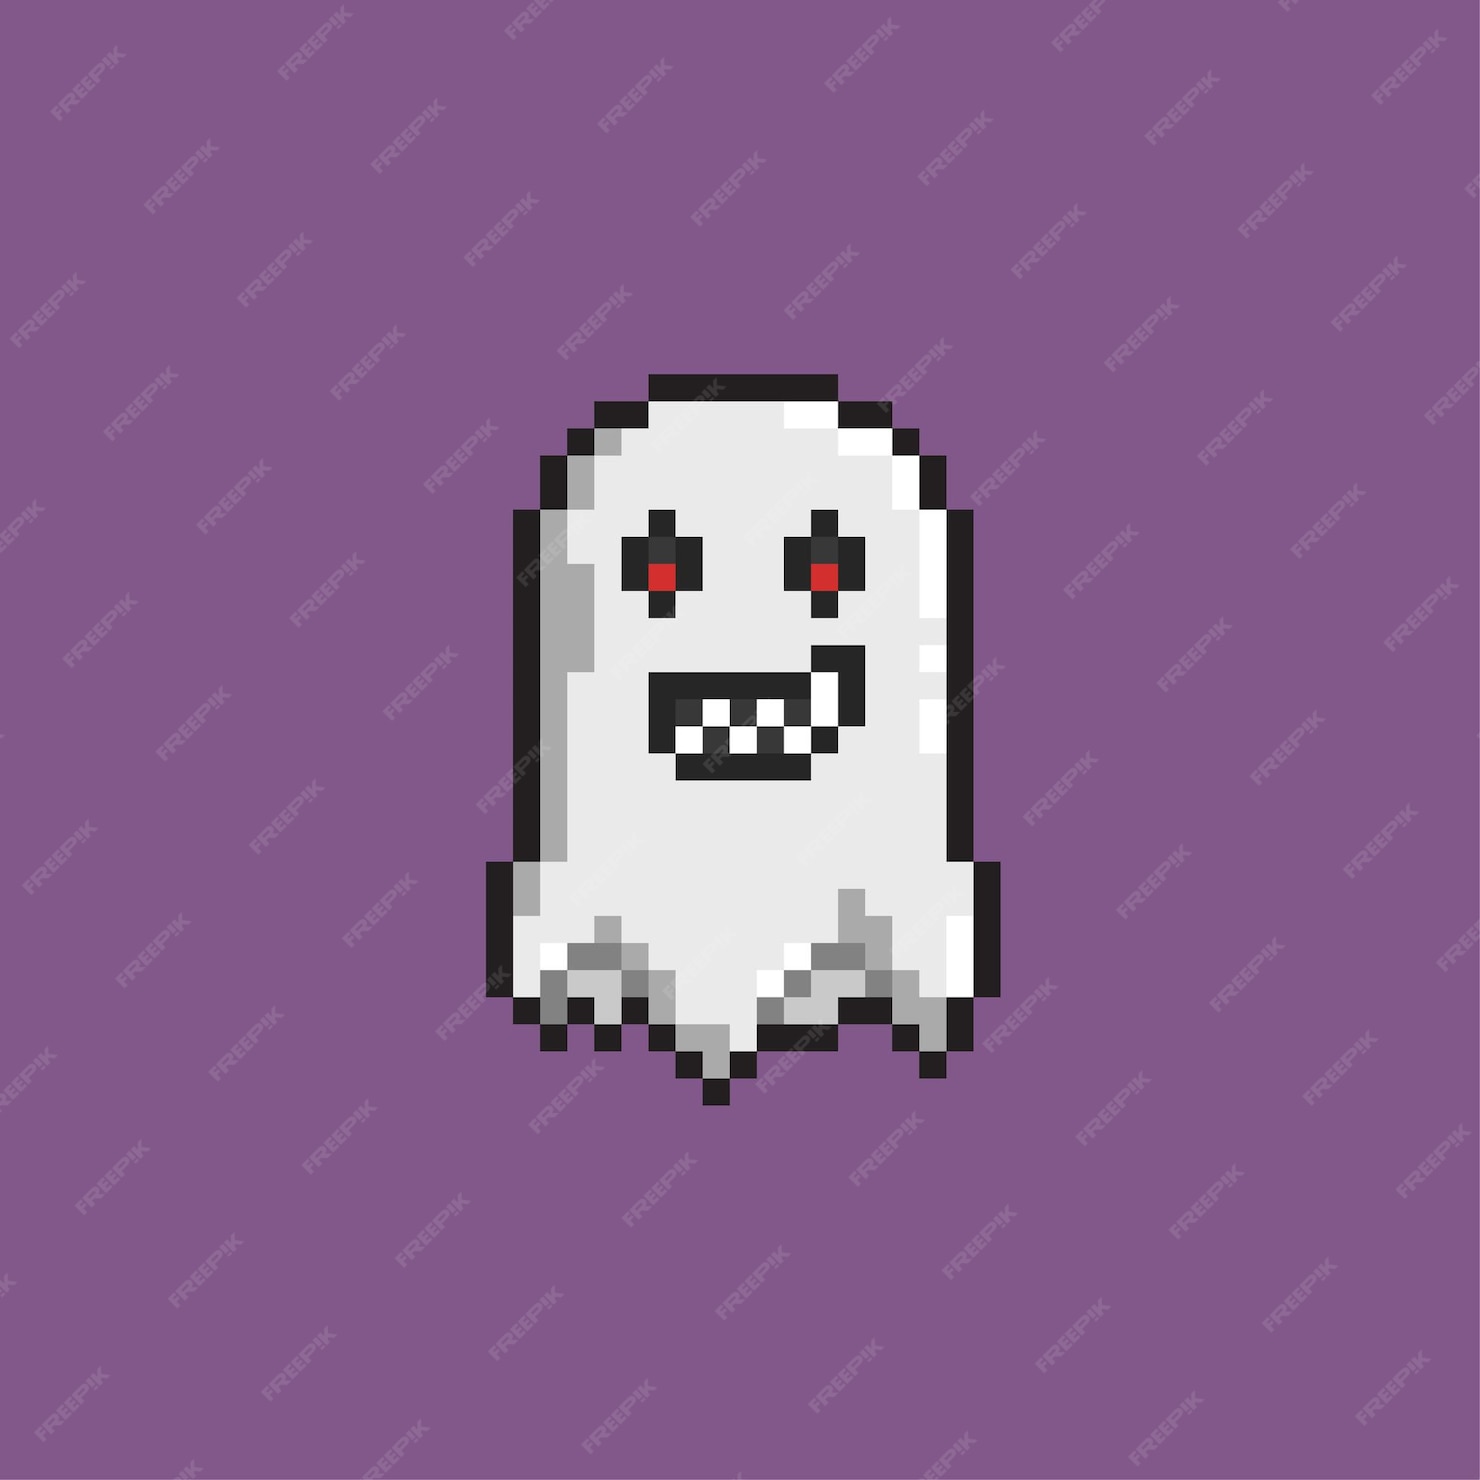 Premium Vector | Evil smiling ghost in pixel art style